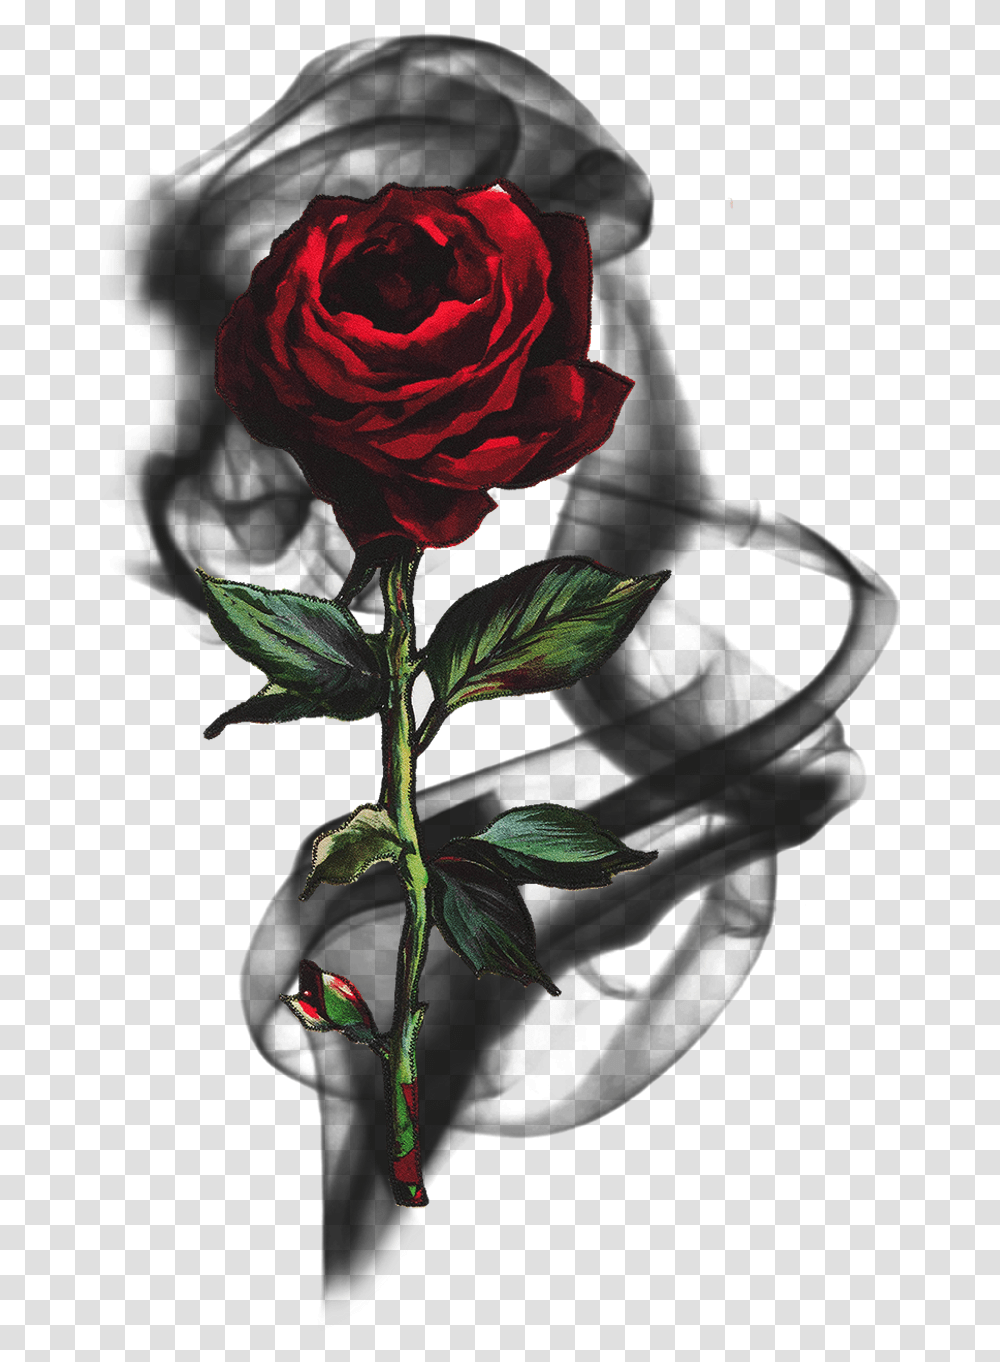 Rose Smoke Blackrose Rosesmoke Flowersmoke Black Red Rose, Plant, Blossom, Acanthaceae Transparent Png